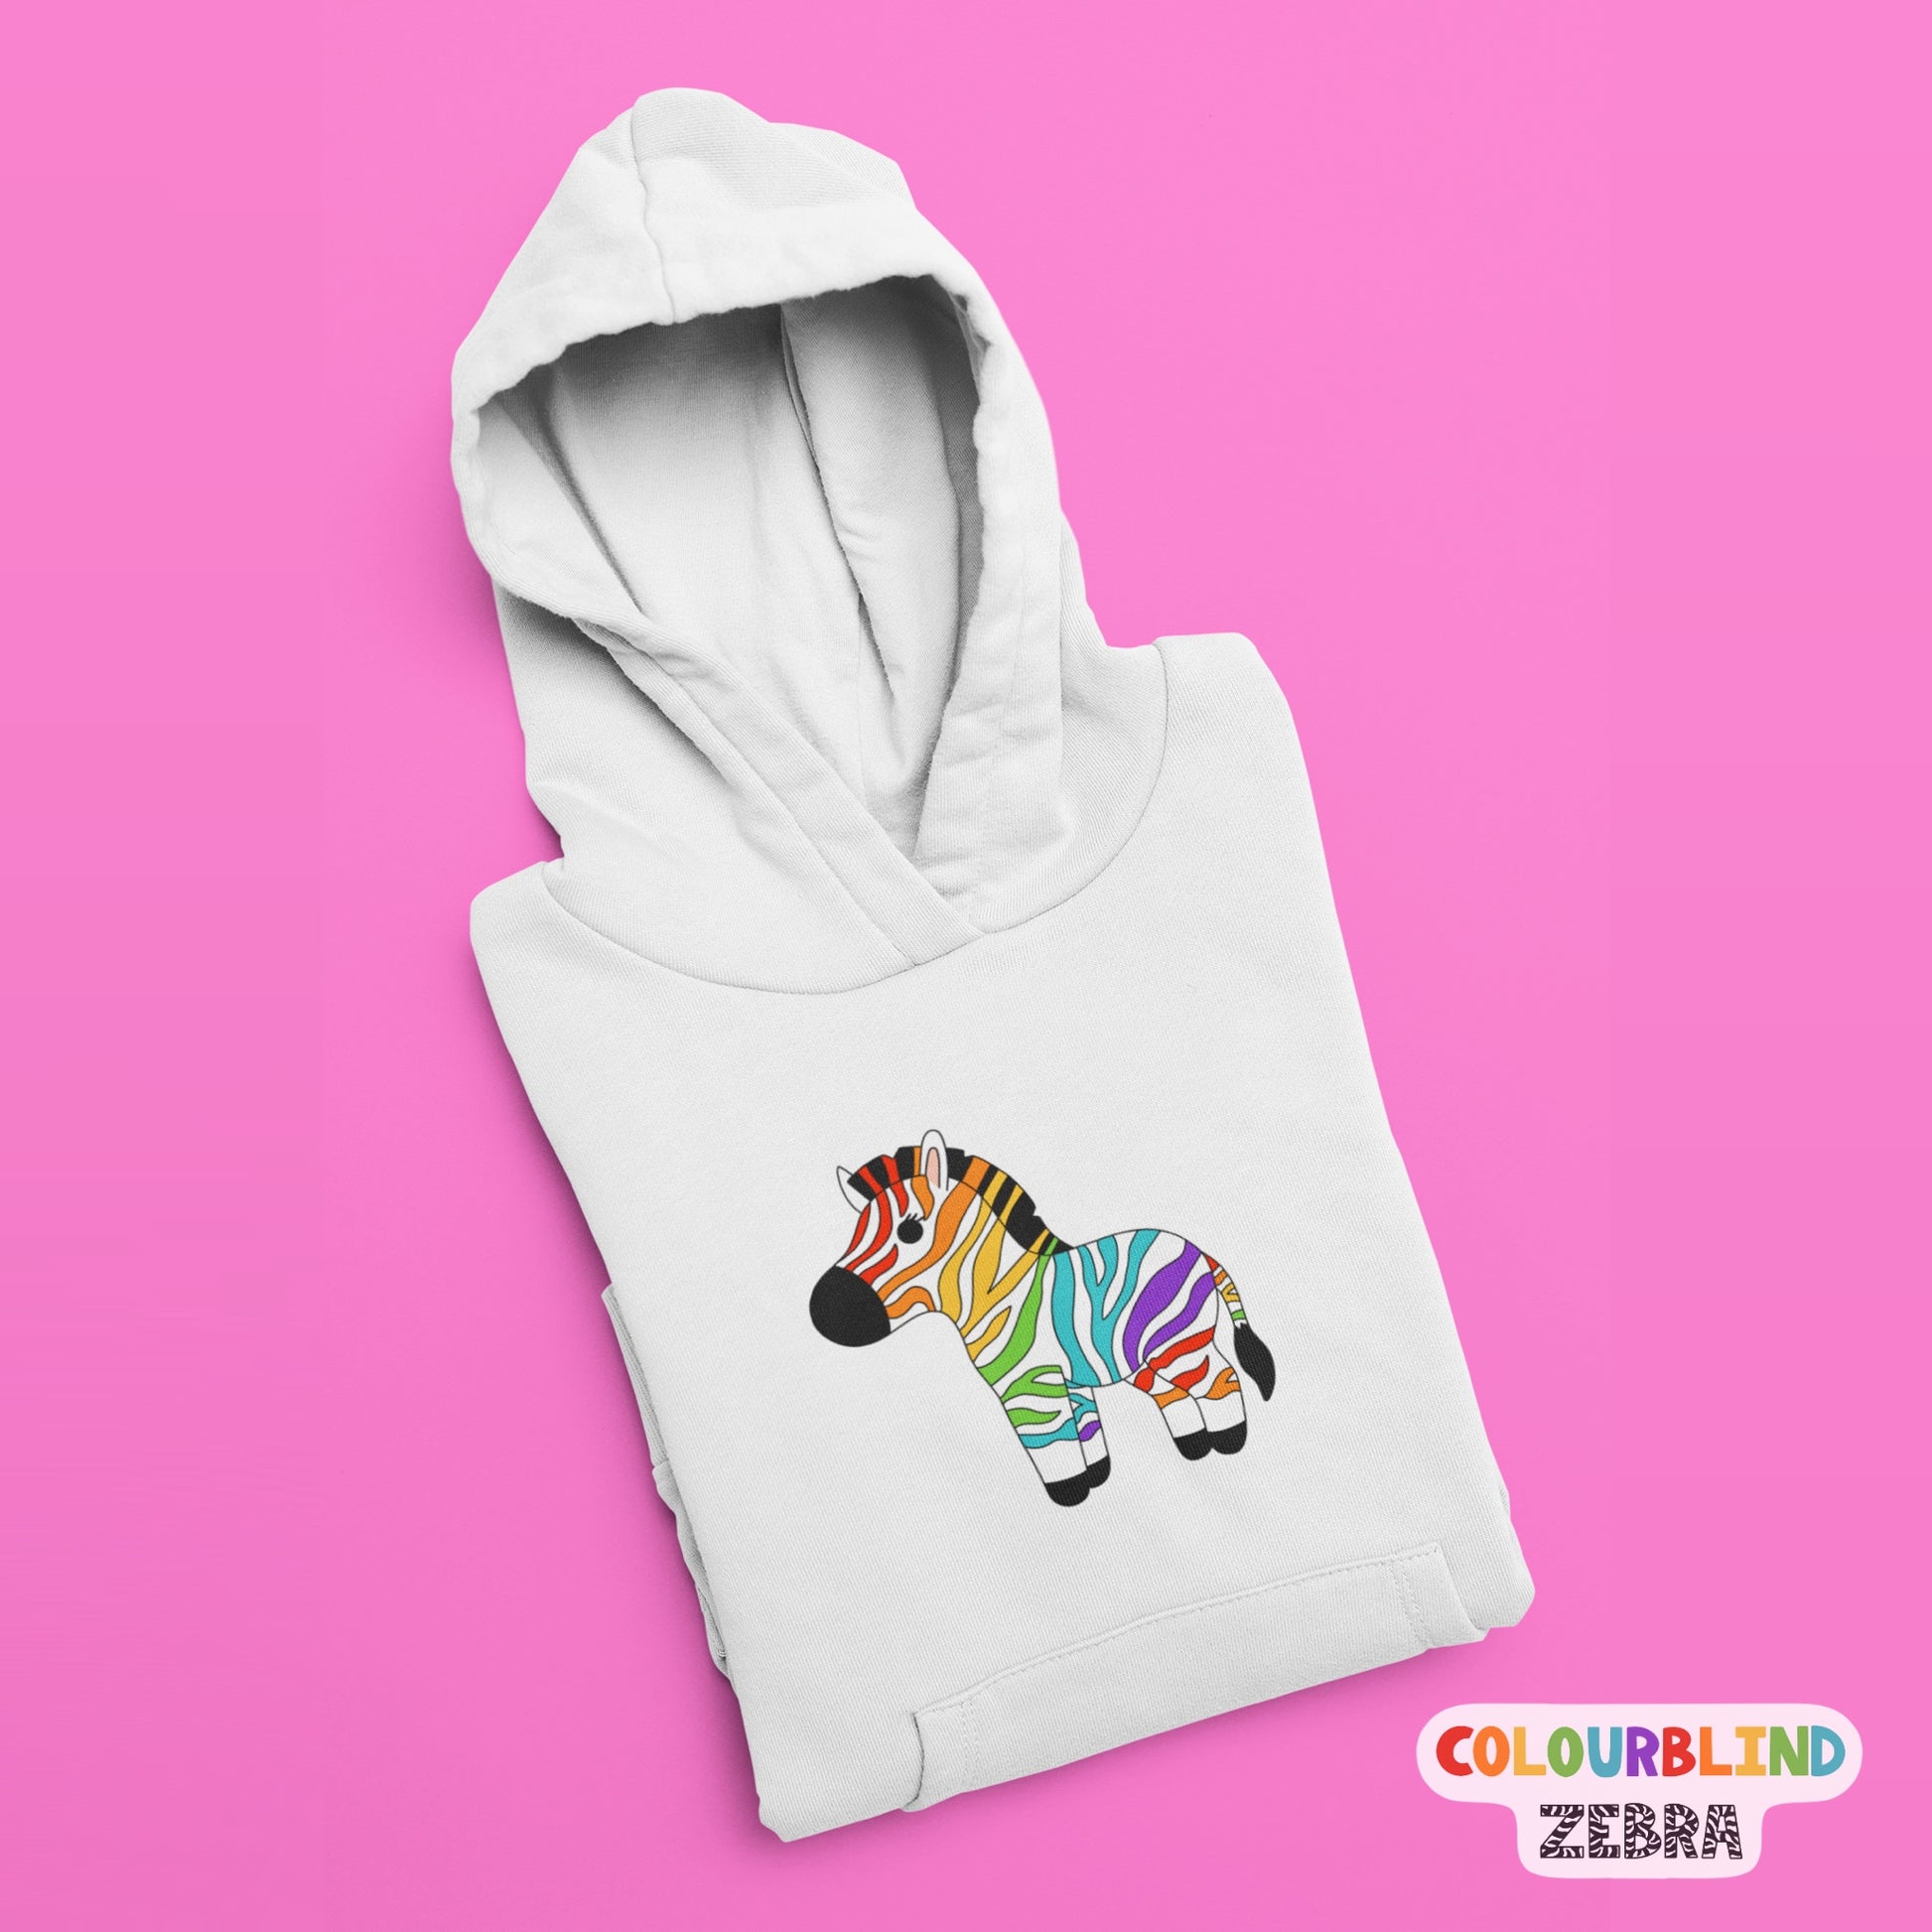 Rainbow Zebra Hoodie – Colourblind Zebra